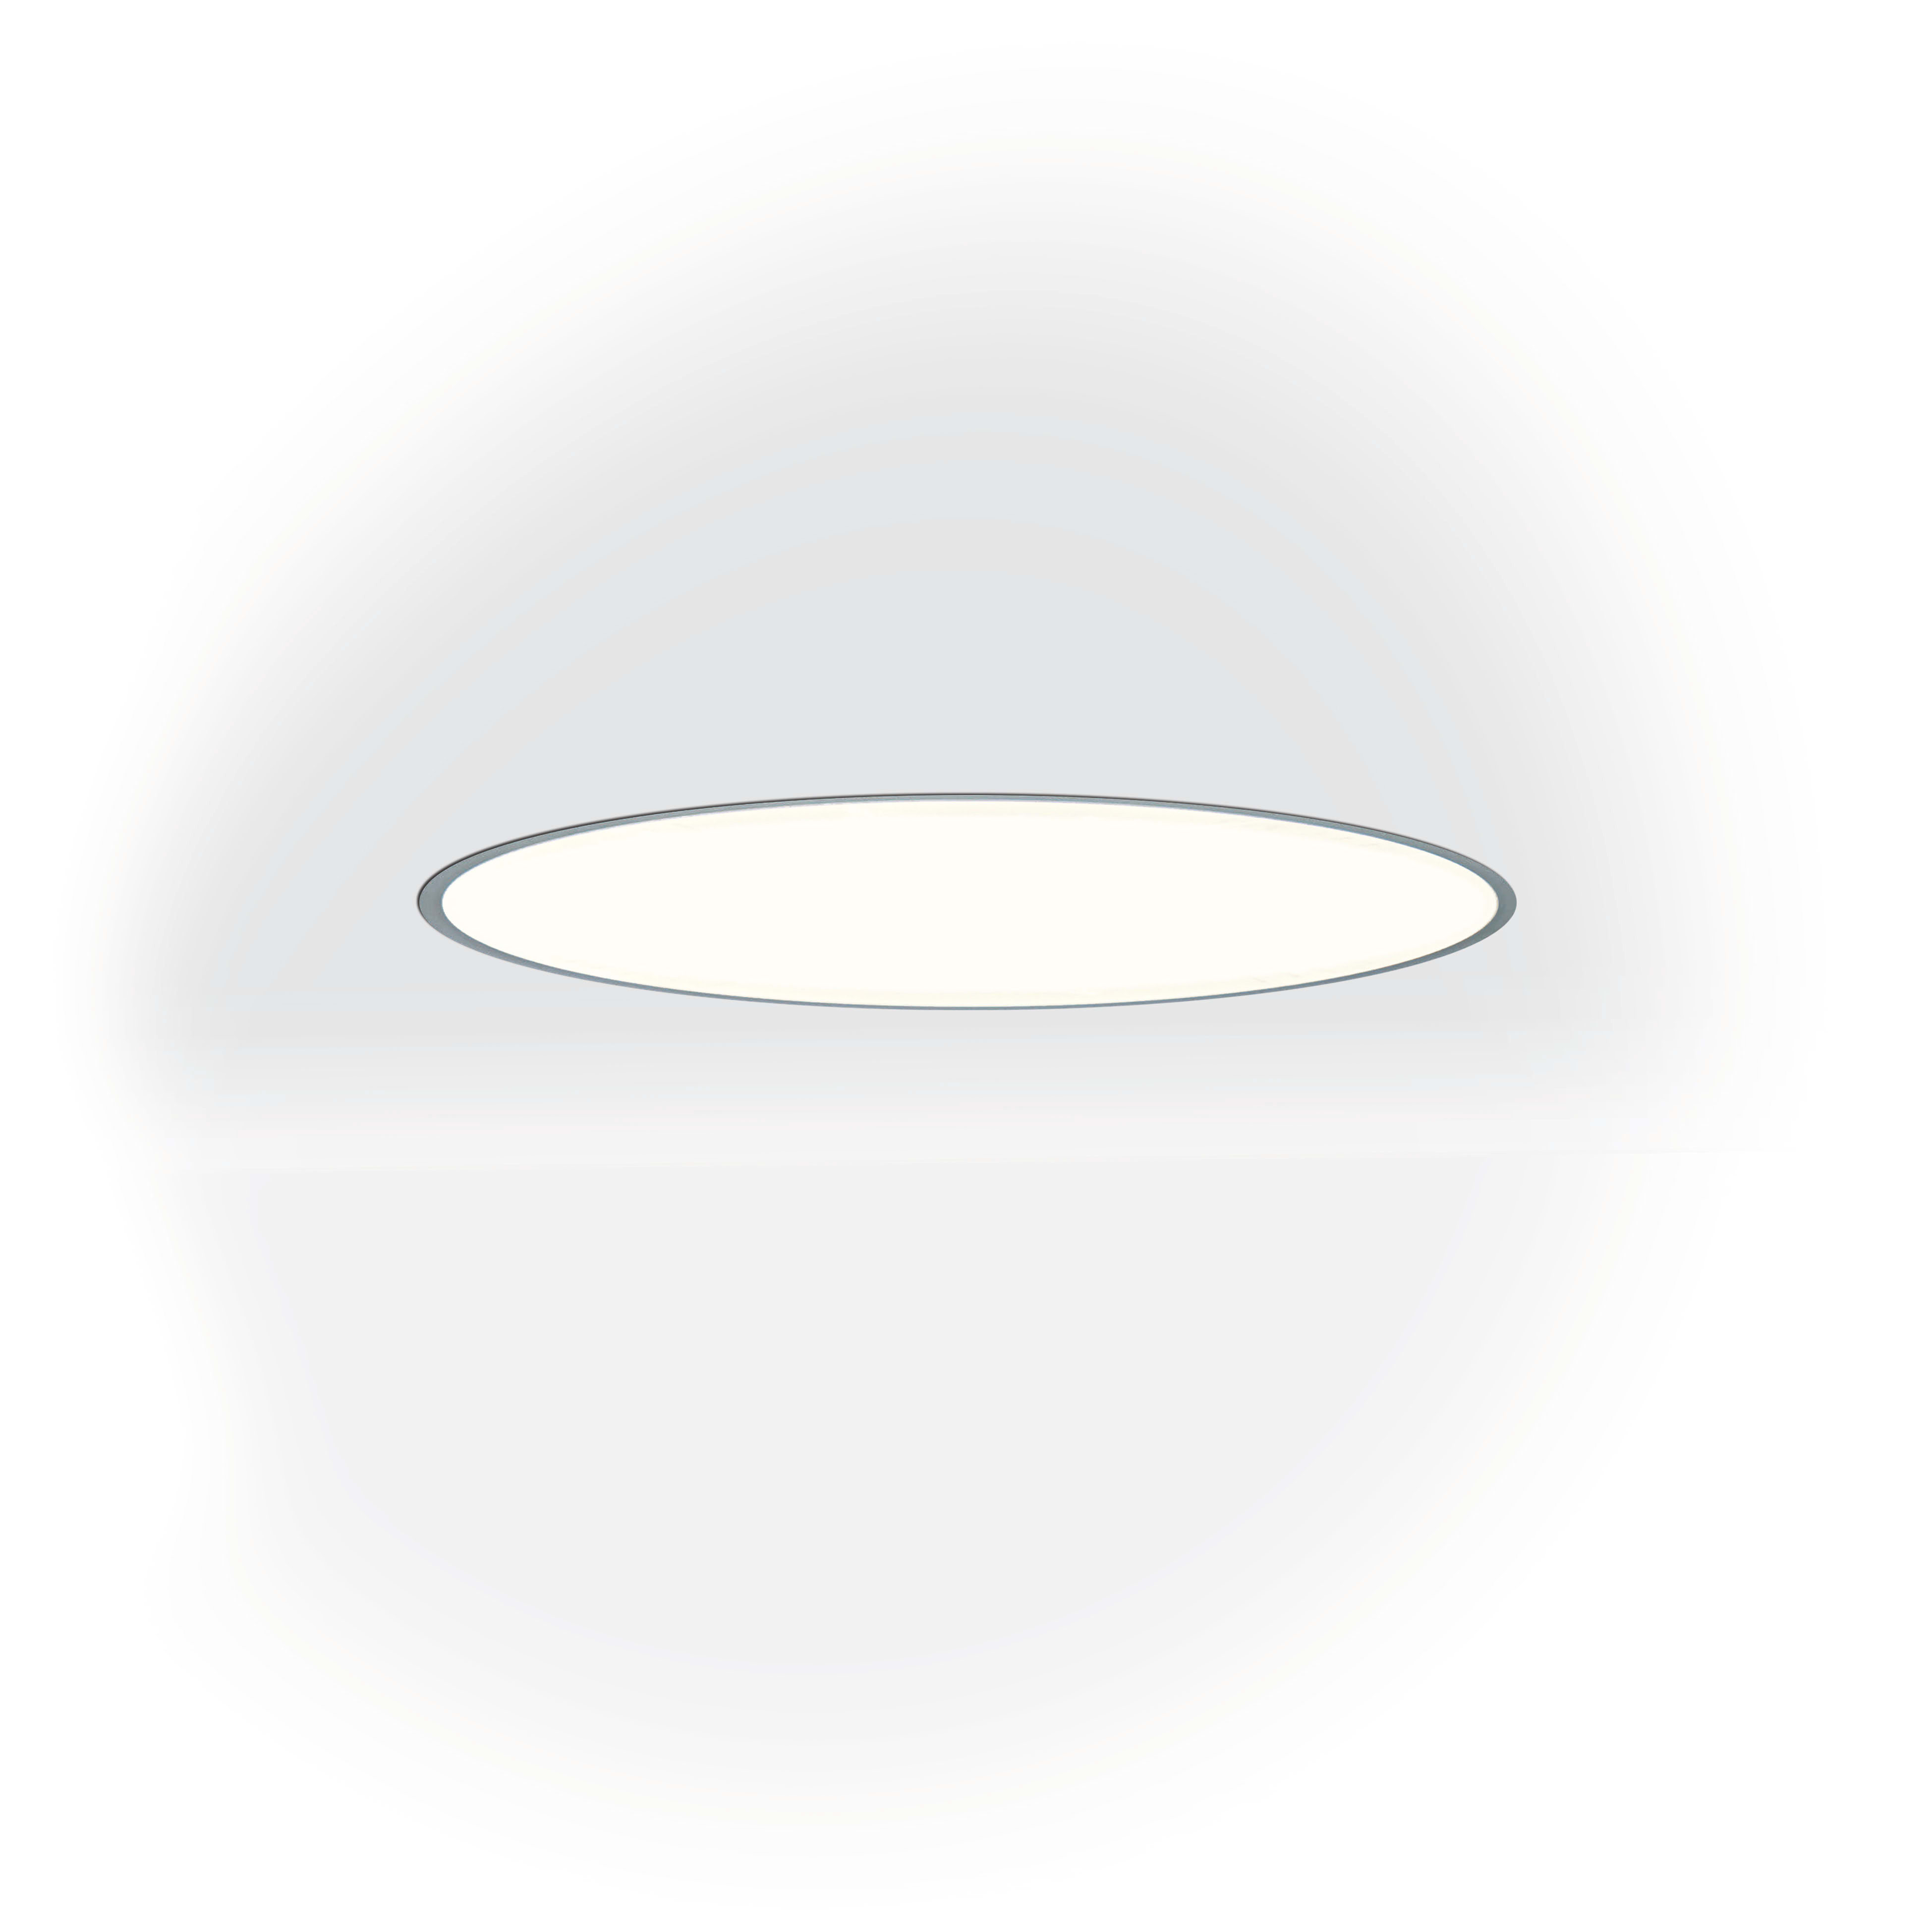 Planlicht - lili encastre argent 0940mm LED HO 4000K 96W 10853lm DALI